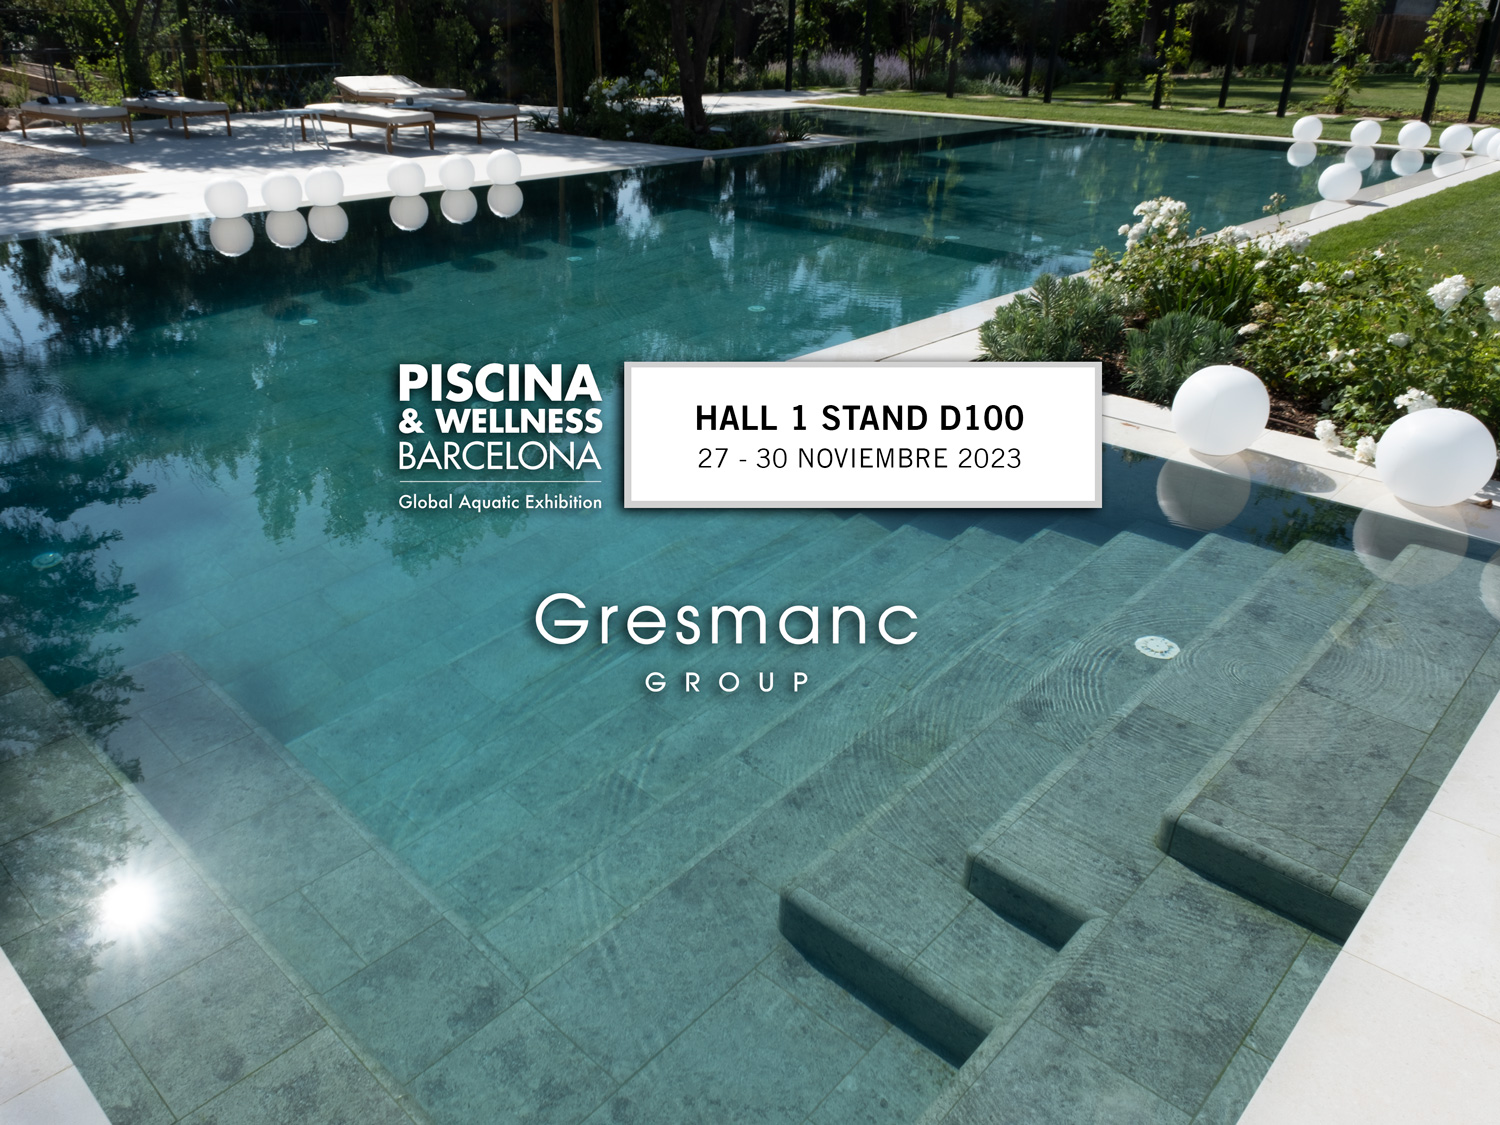 Gresmanc piscina wellnes 2023 1 1